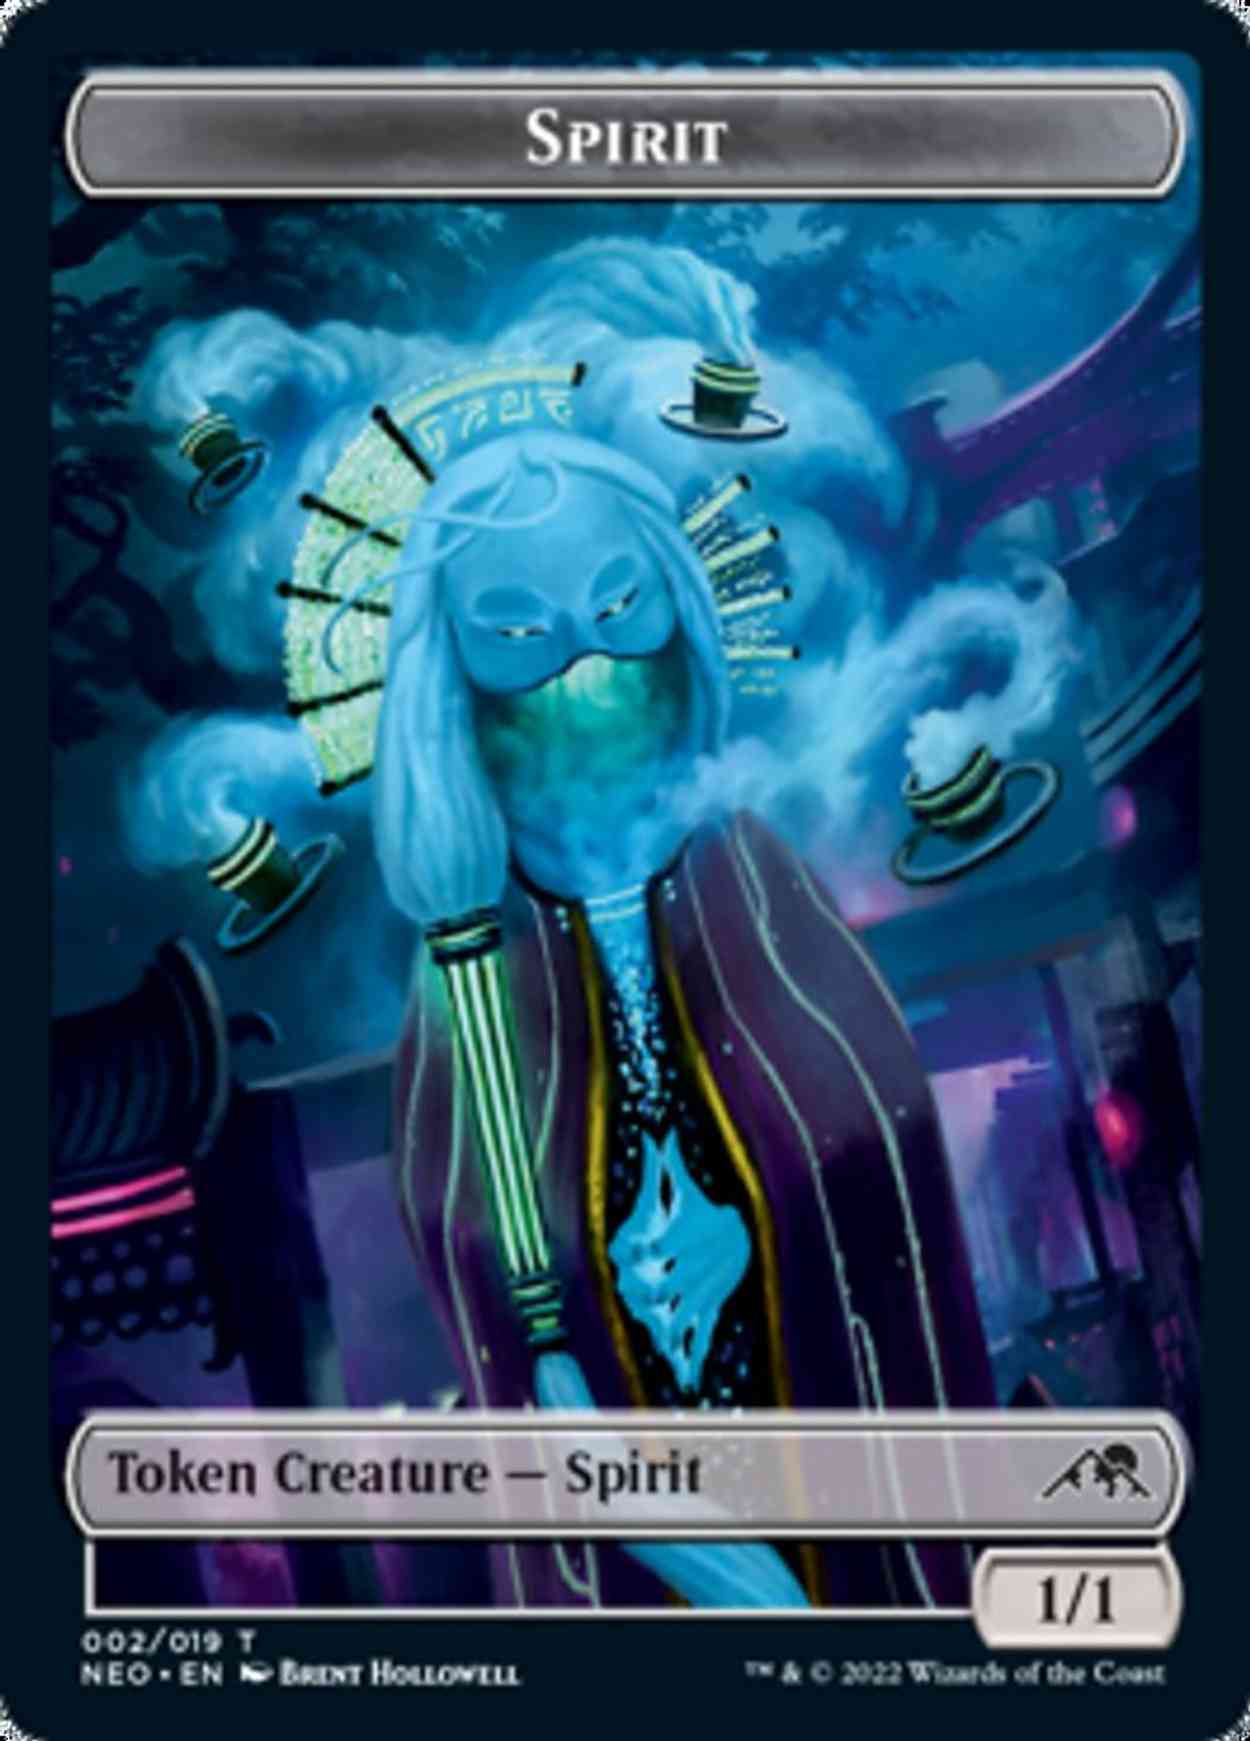 Spirit (002) // Keimi (013) Double-sided Token magic card front